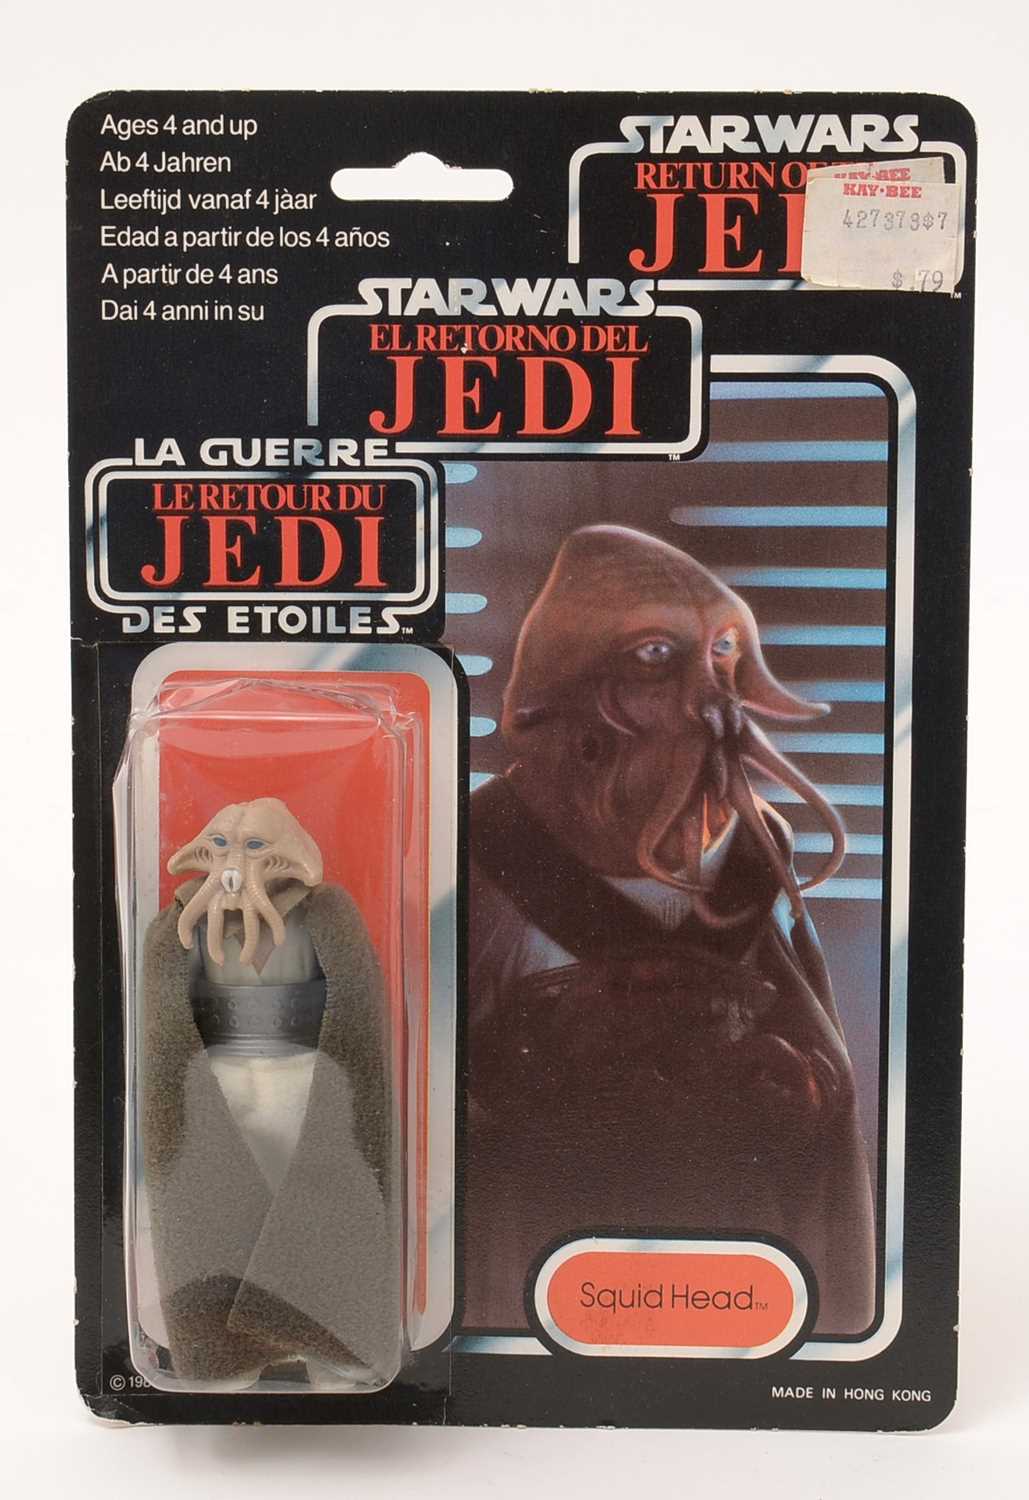 239 - Star Wars Return of the Jedi Squid Head carded figure,